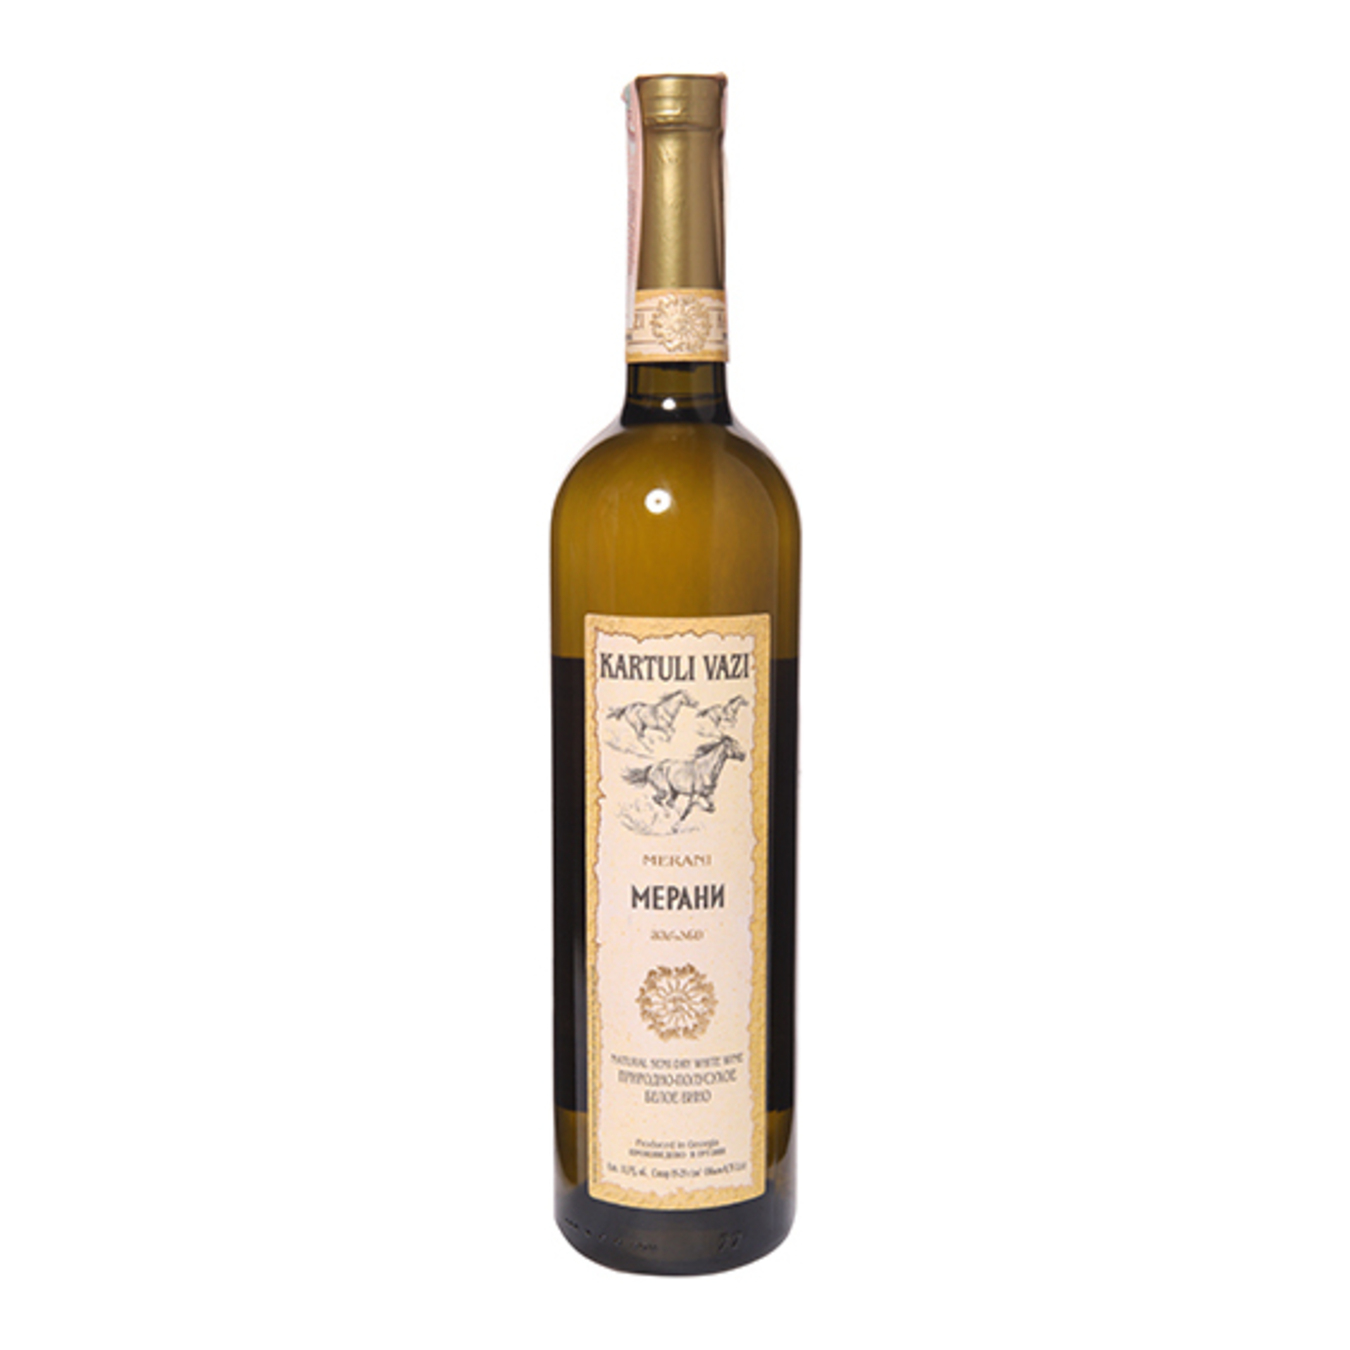 Kartuli Vazi Merani White Semi-dry Wine 11% 0,75l